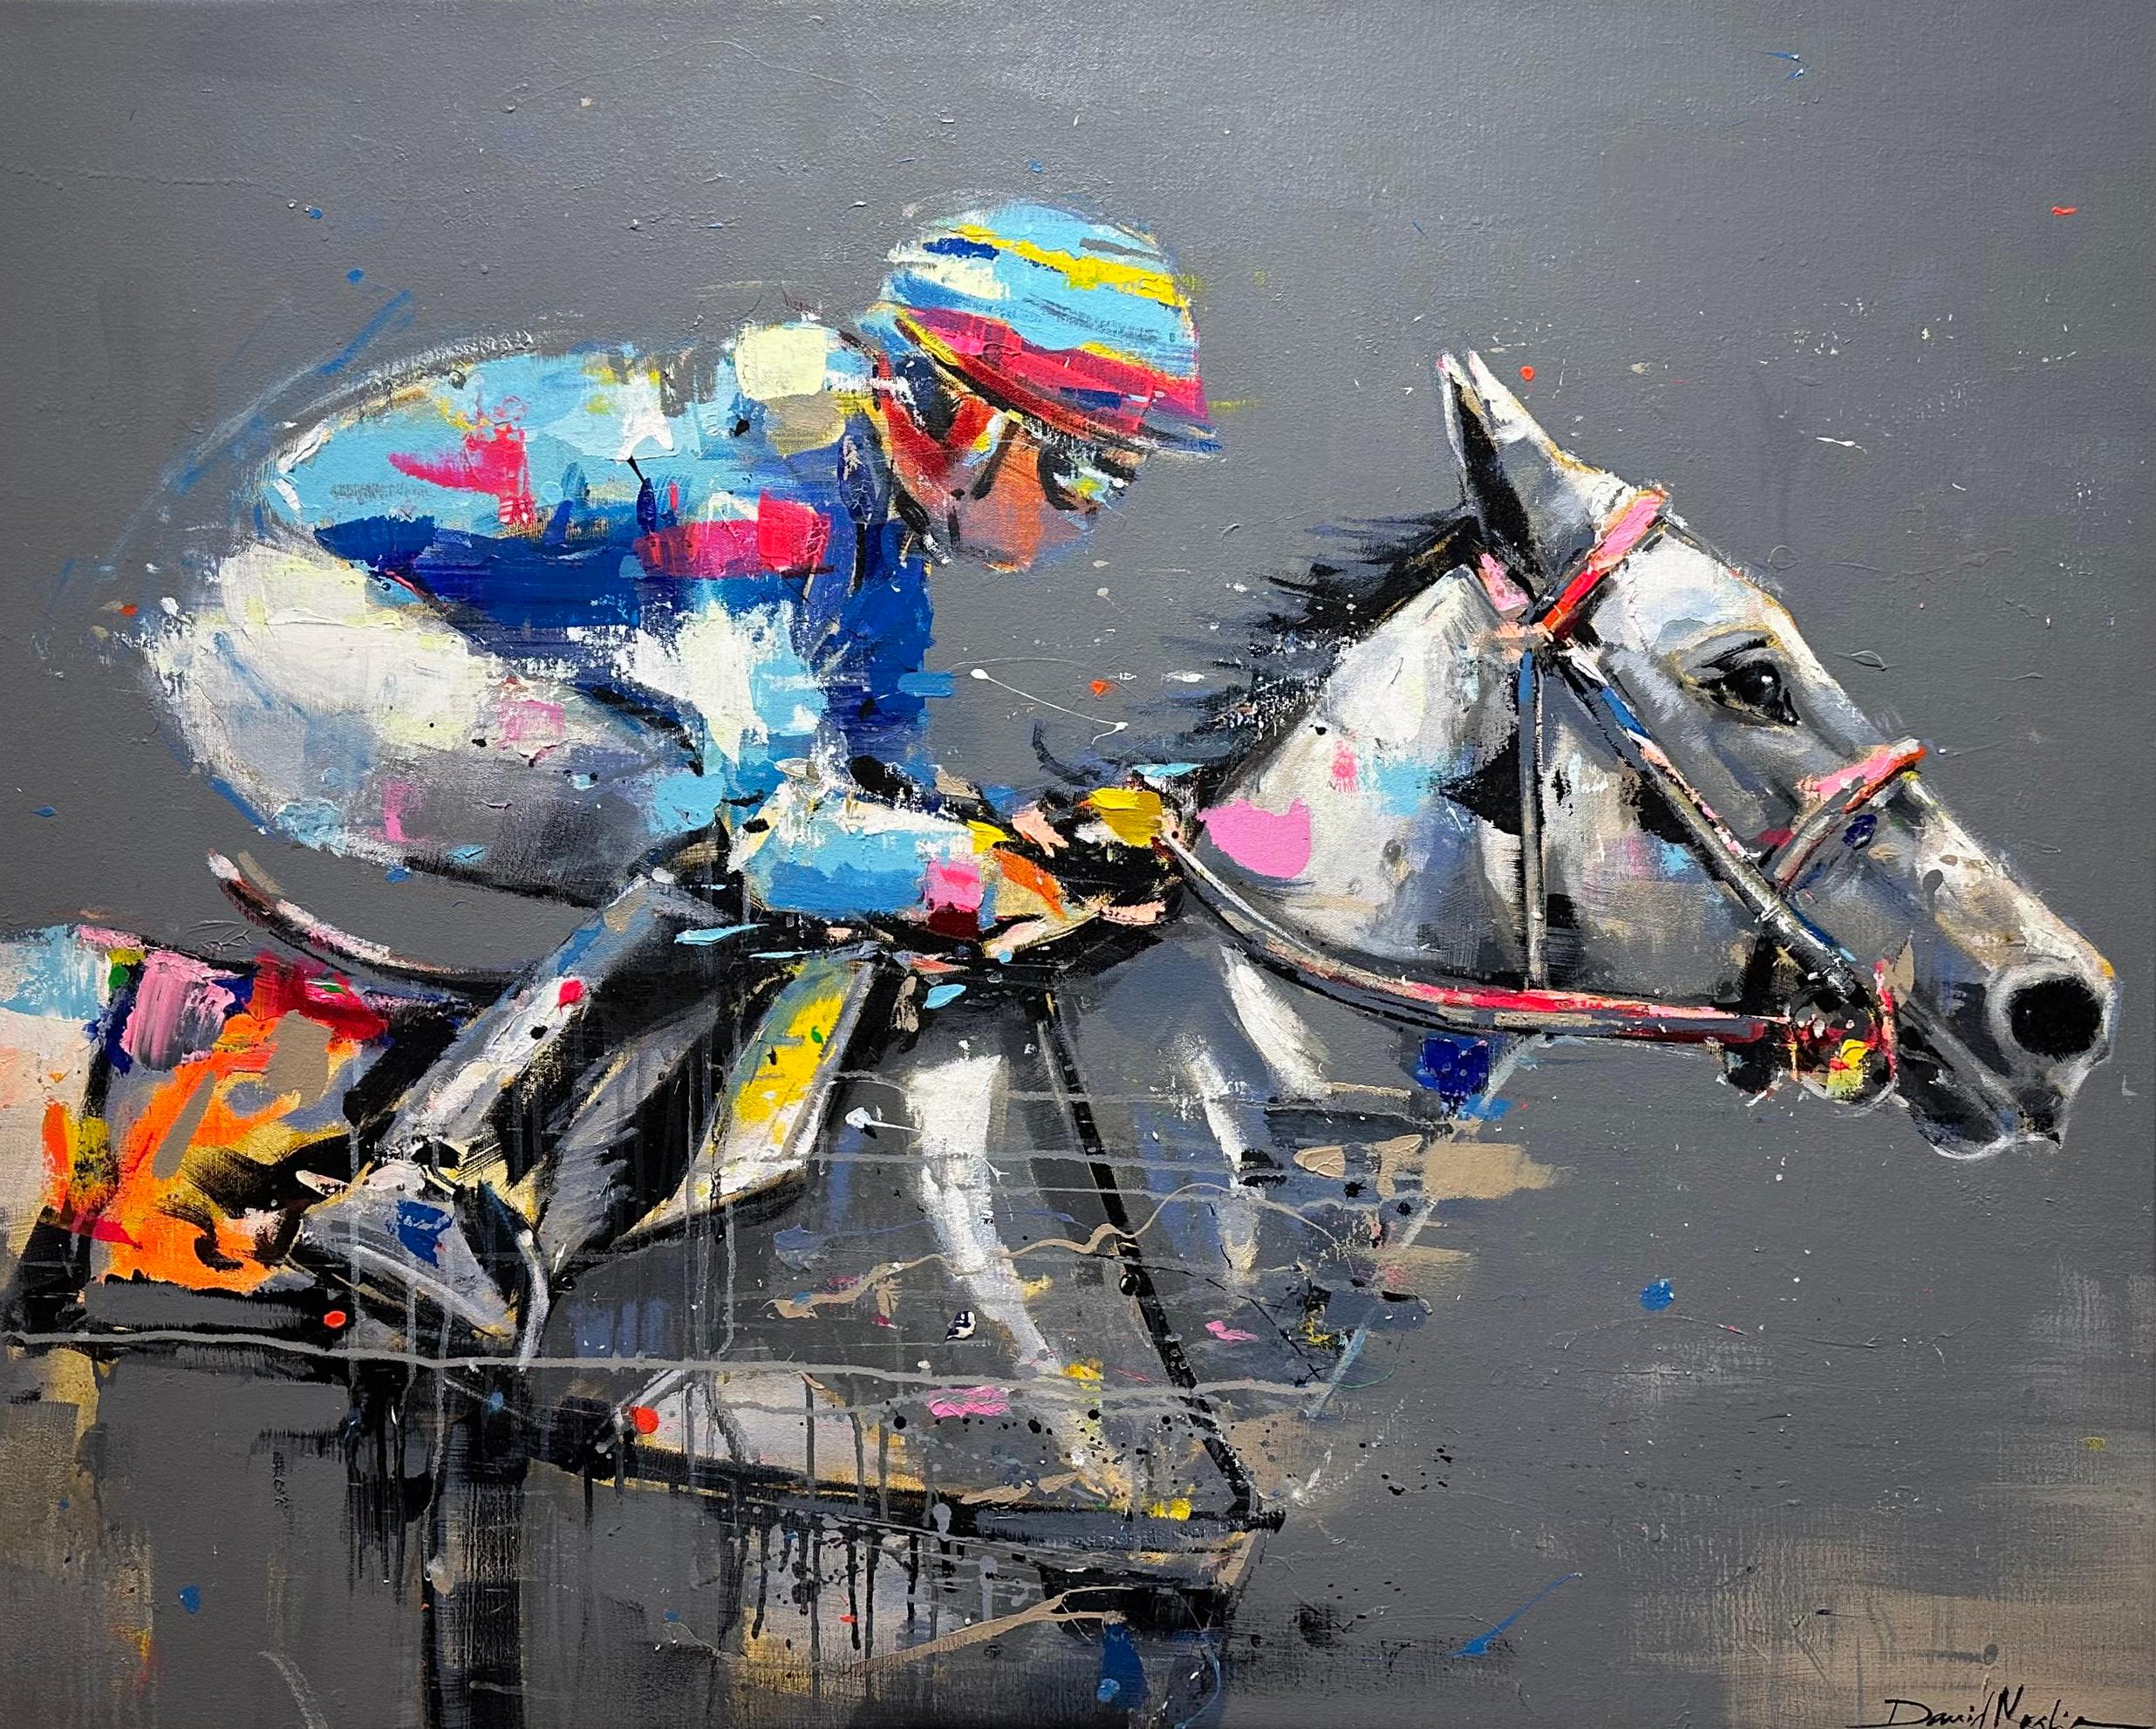 David Noalia, "Rainbow Race" 36x45 Colorful Horse Race Equine Painting